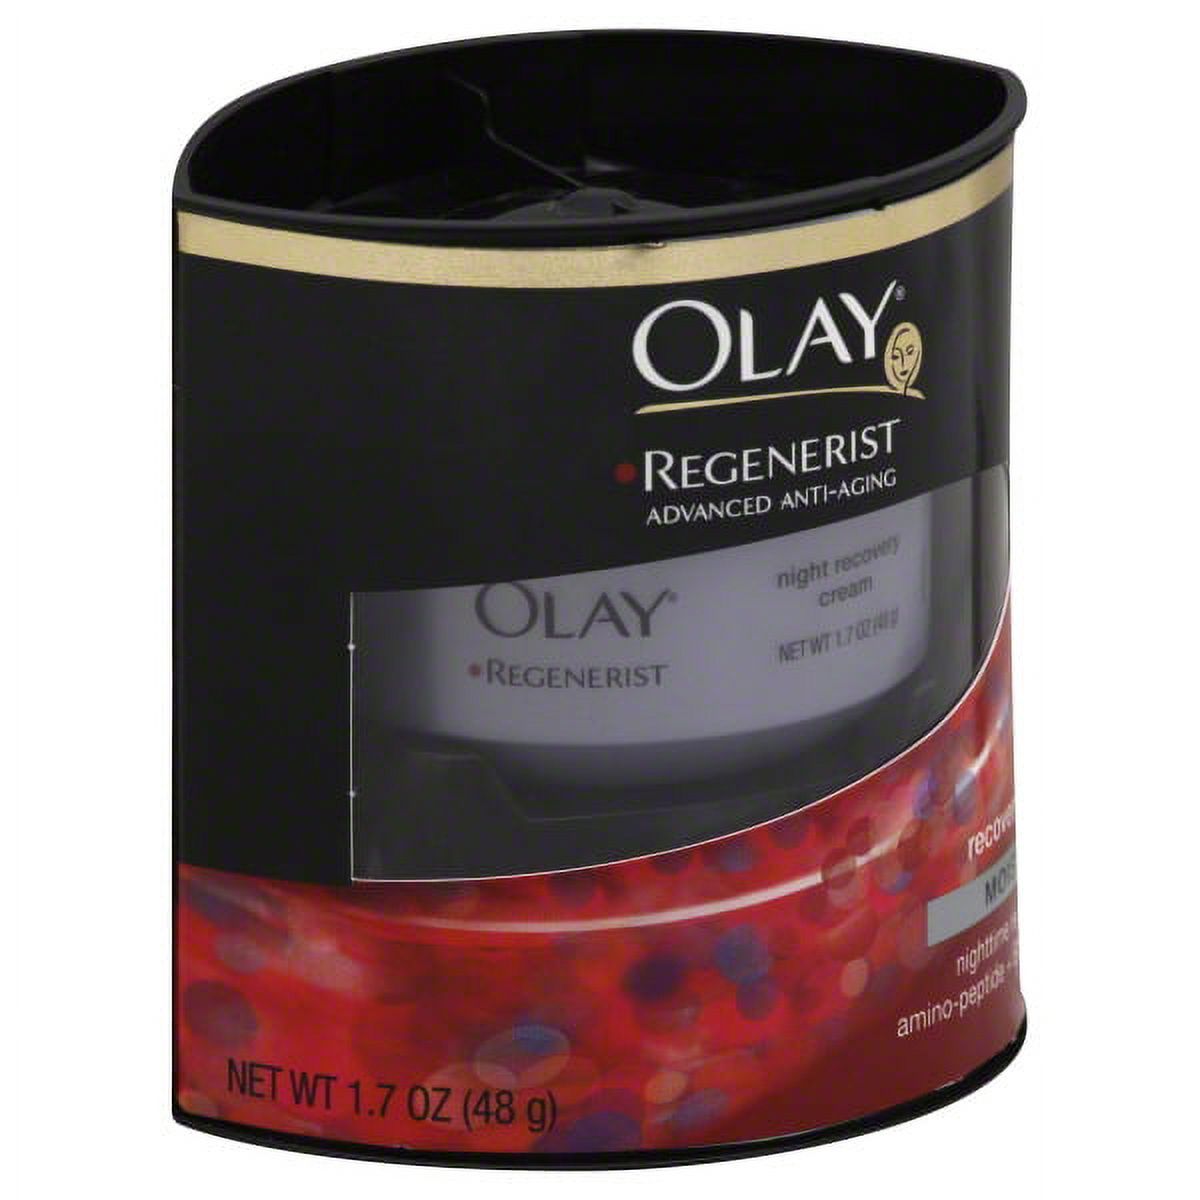 Olay Regenerist Night Recovery Cream Moisturizer, 1.7 oz - image 3 of 10